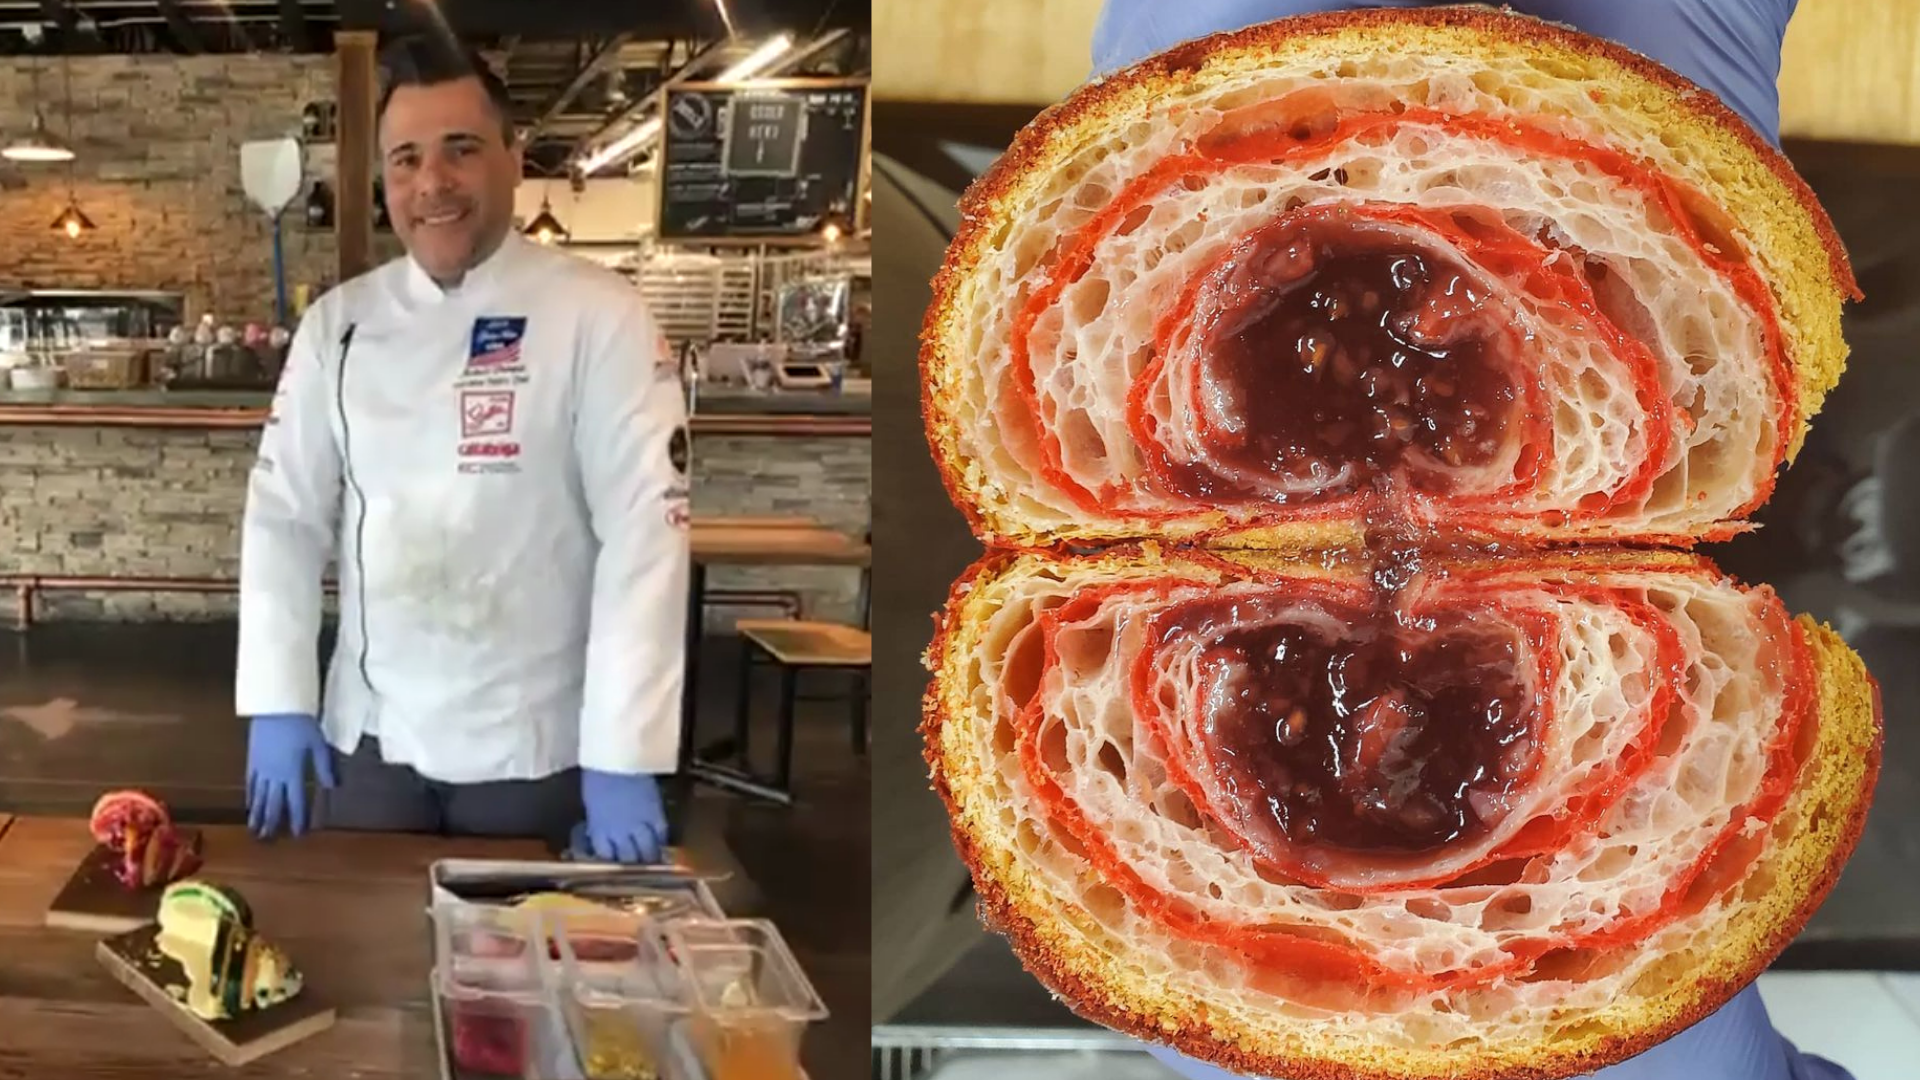 Walla Walla Bread Co.'s Michele Pompei demos how to make raspberry and pistachio croissants 🥐 #newdaynw